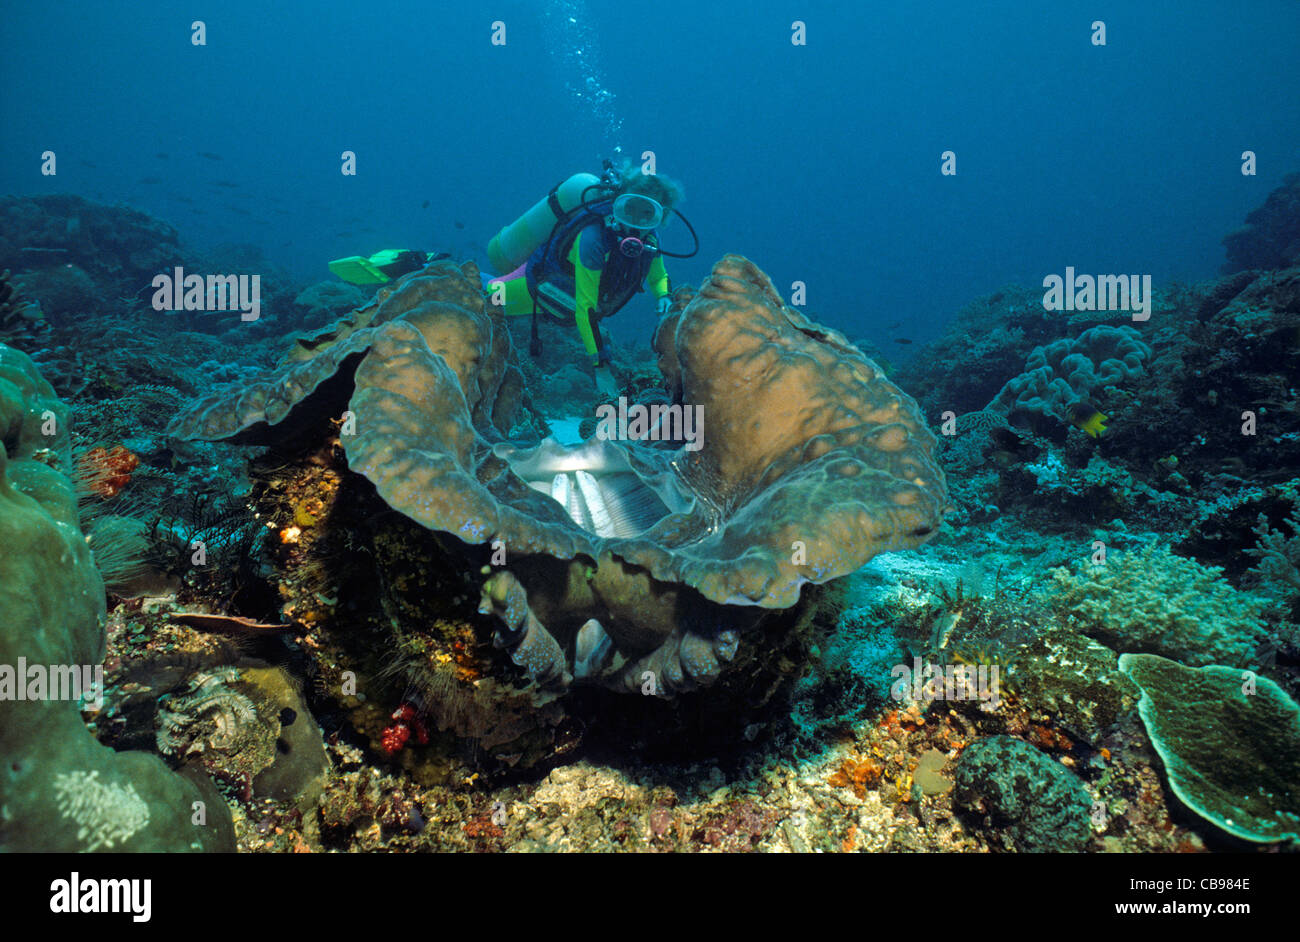 Scuba diver at a giant tridacna clam (Tridacna gigas), largest living bivalve mollusk, Irian Jaya, Neu Guinea, Indonesia, Asia Stock Photo